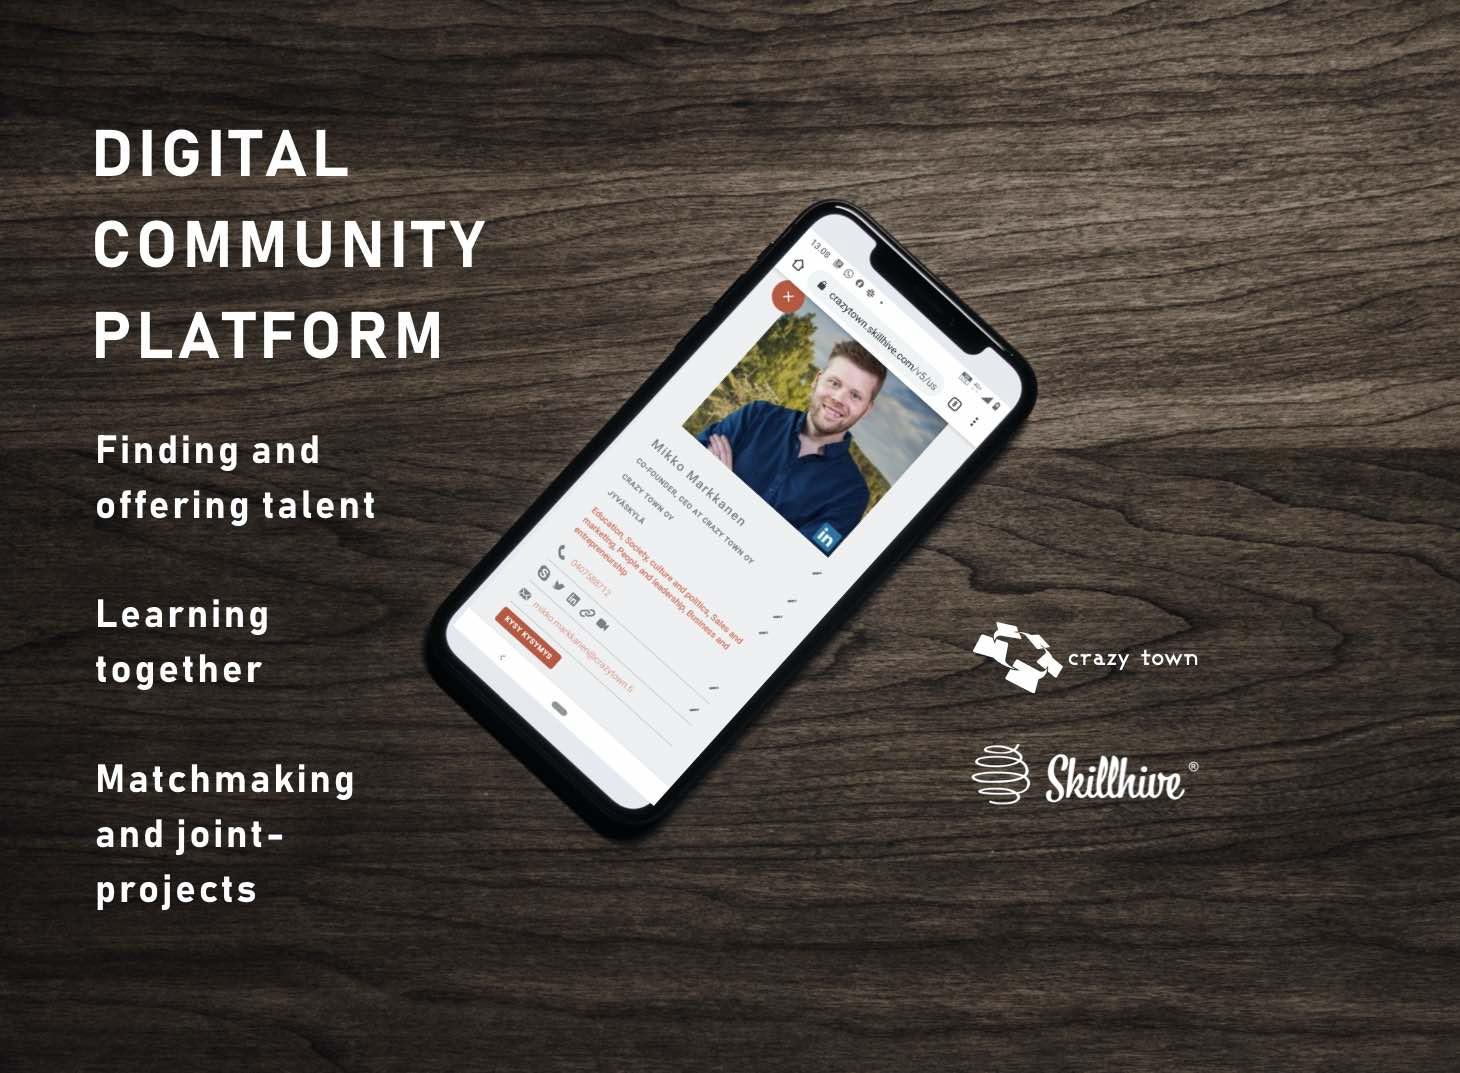 Crazy Town digital community platform goes online